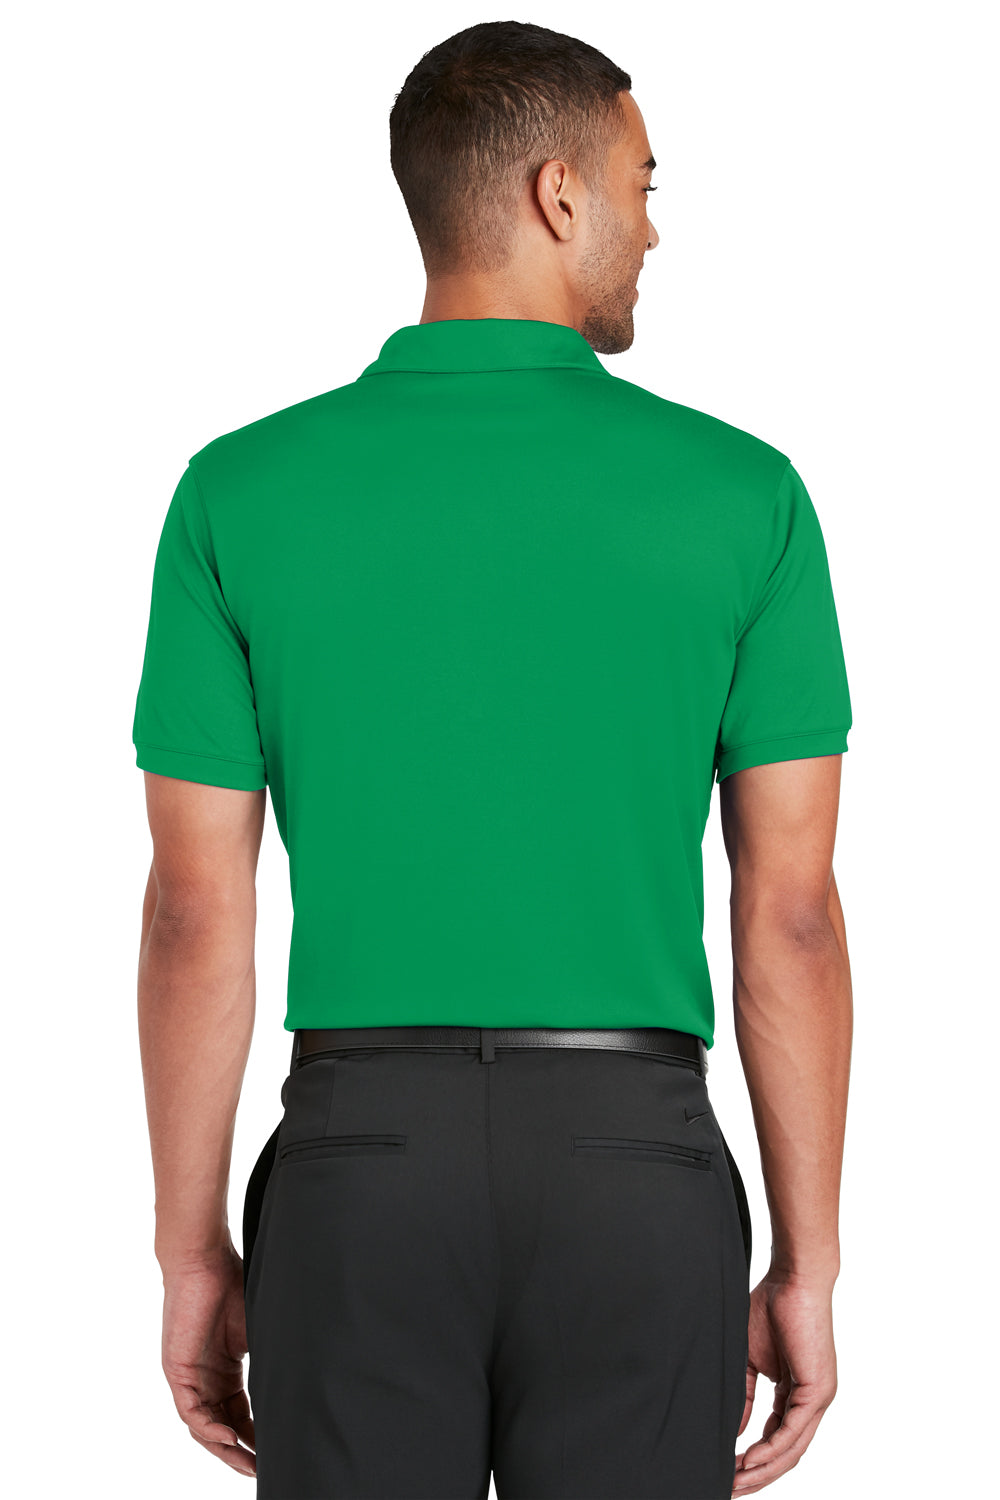 Nike 799802 Mens Players Dri-Fit Moisture Wicking Short Sleeve Polo Shirt Pine Green Model Back